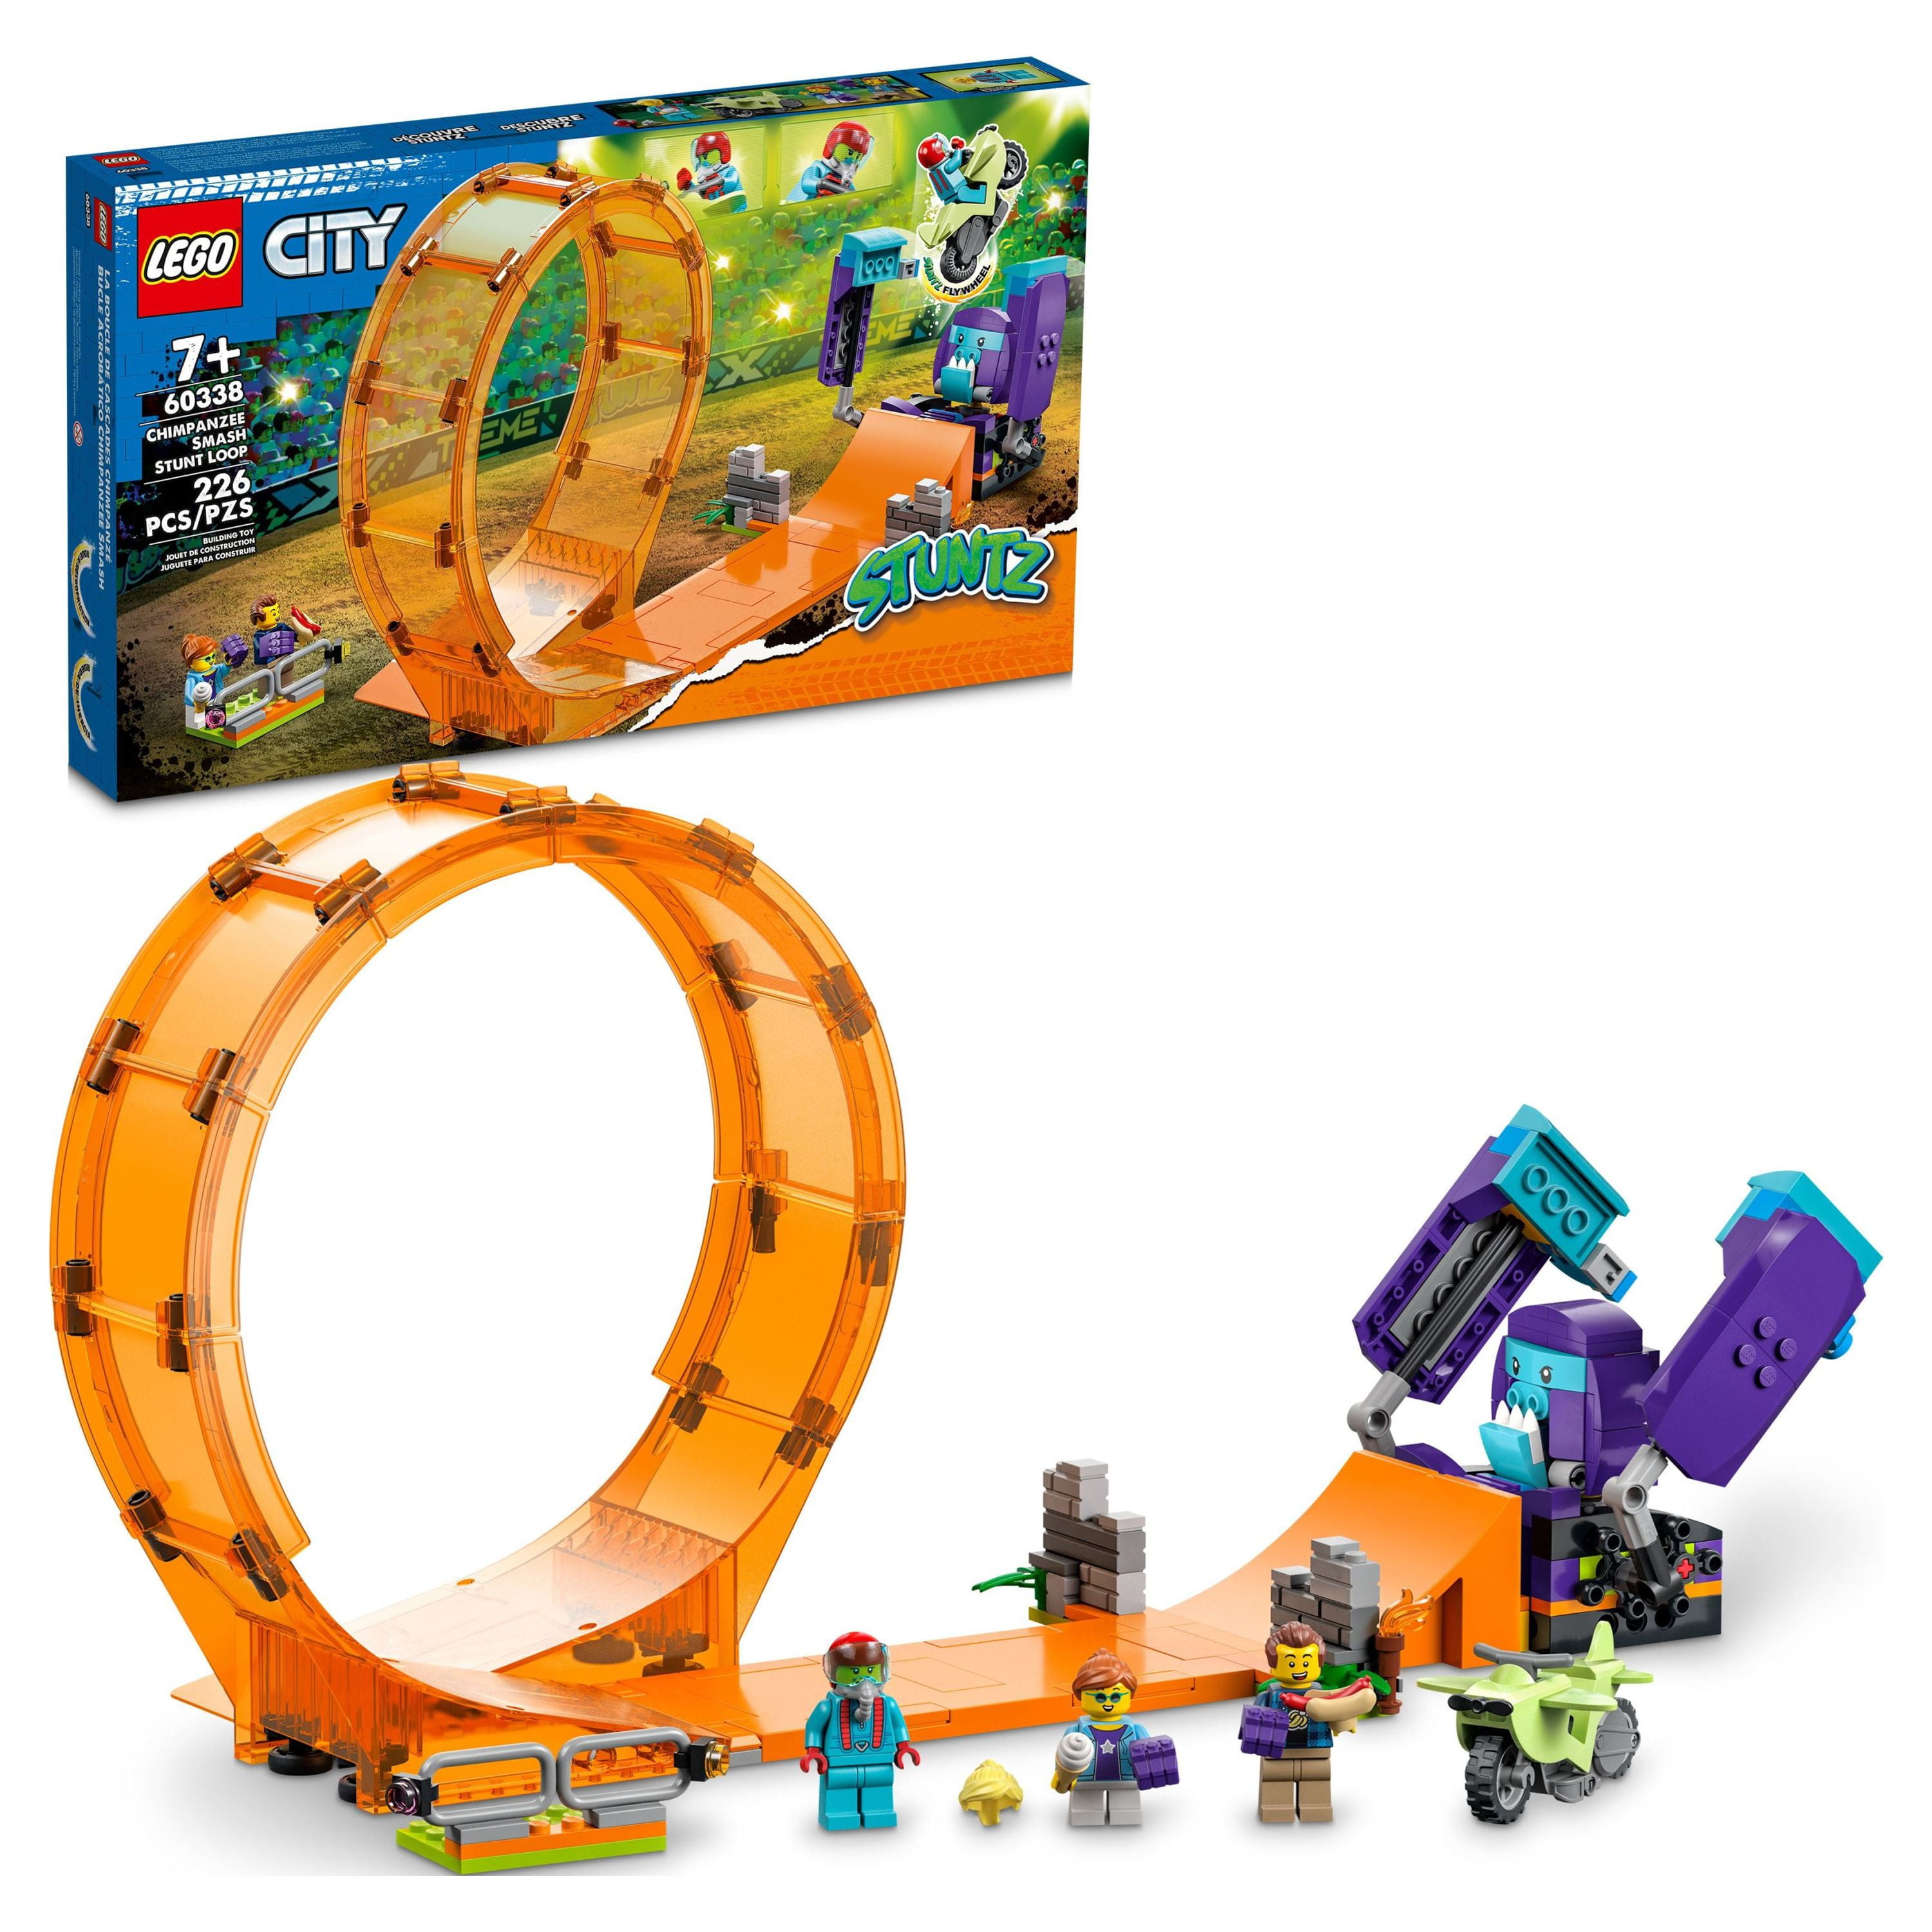 226-Piece LEGO City Stuntz Smashing Chimpanzee Stunt Loop Building Set $26.24 + Free Shipping w/ Walmart+ or on $35+